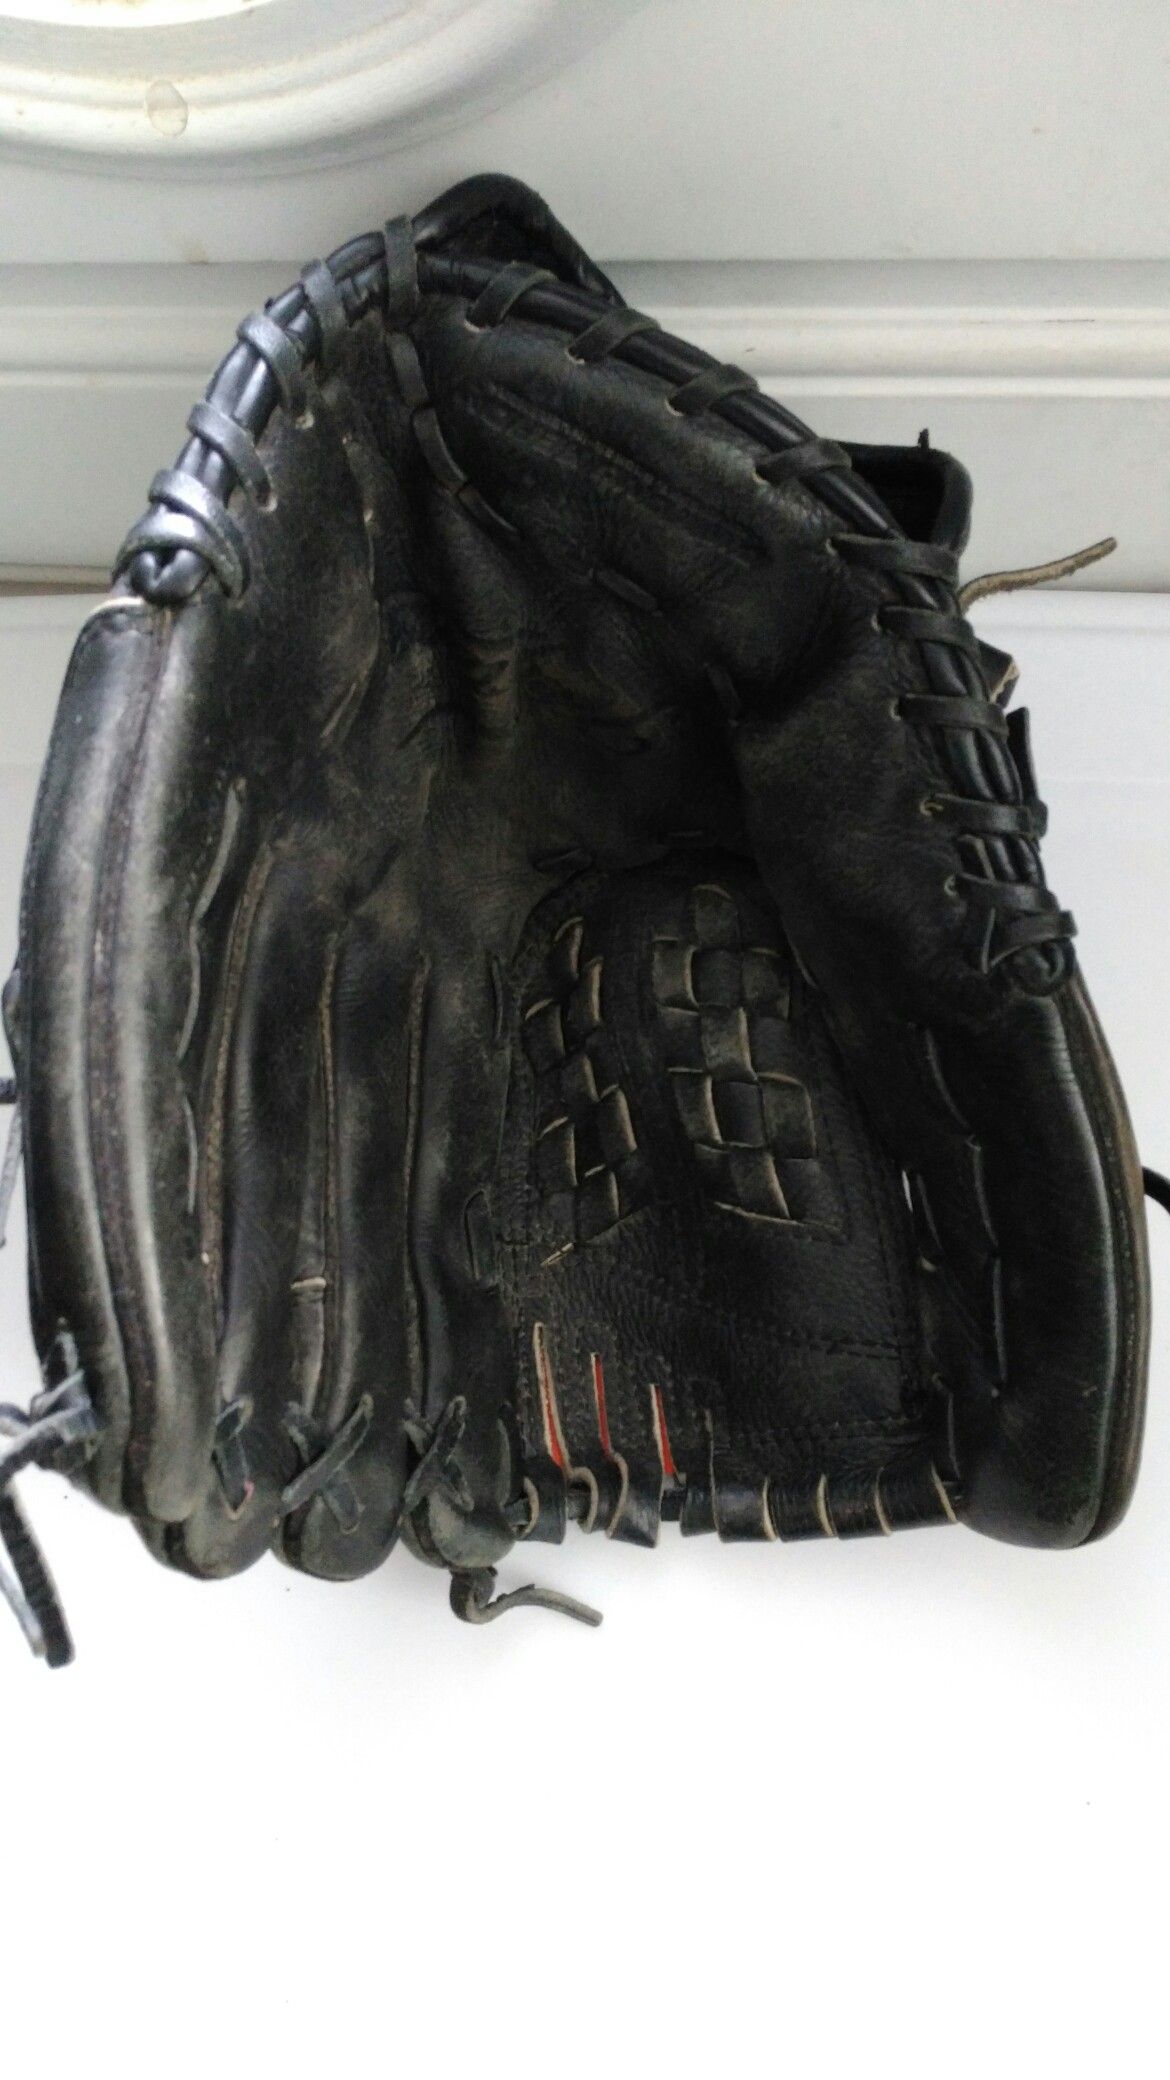 Nike softball glove 13" baseball mitt